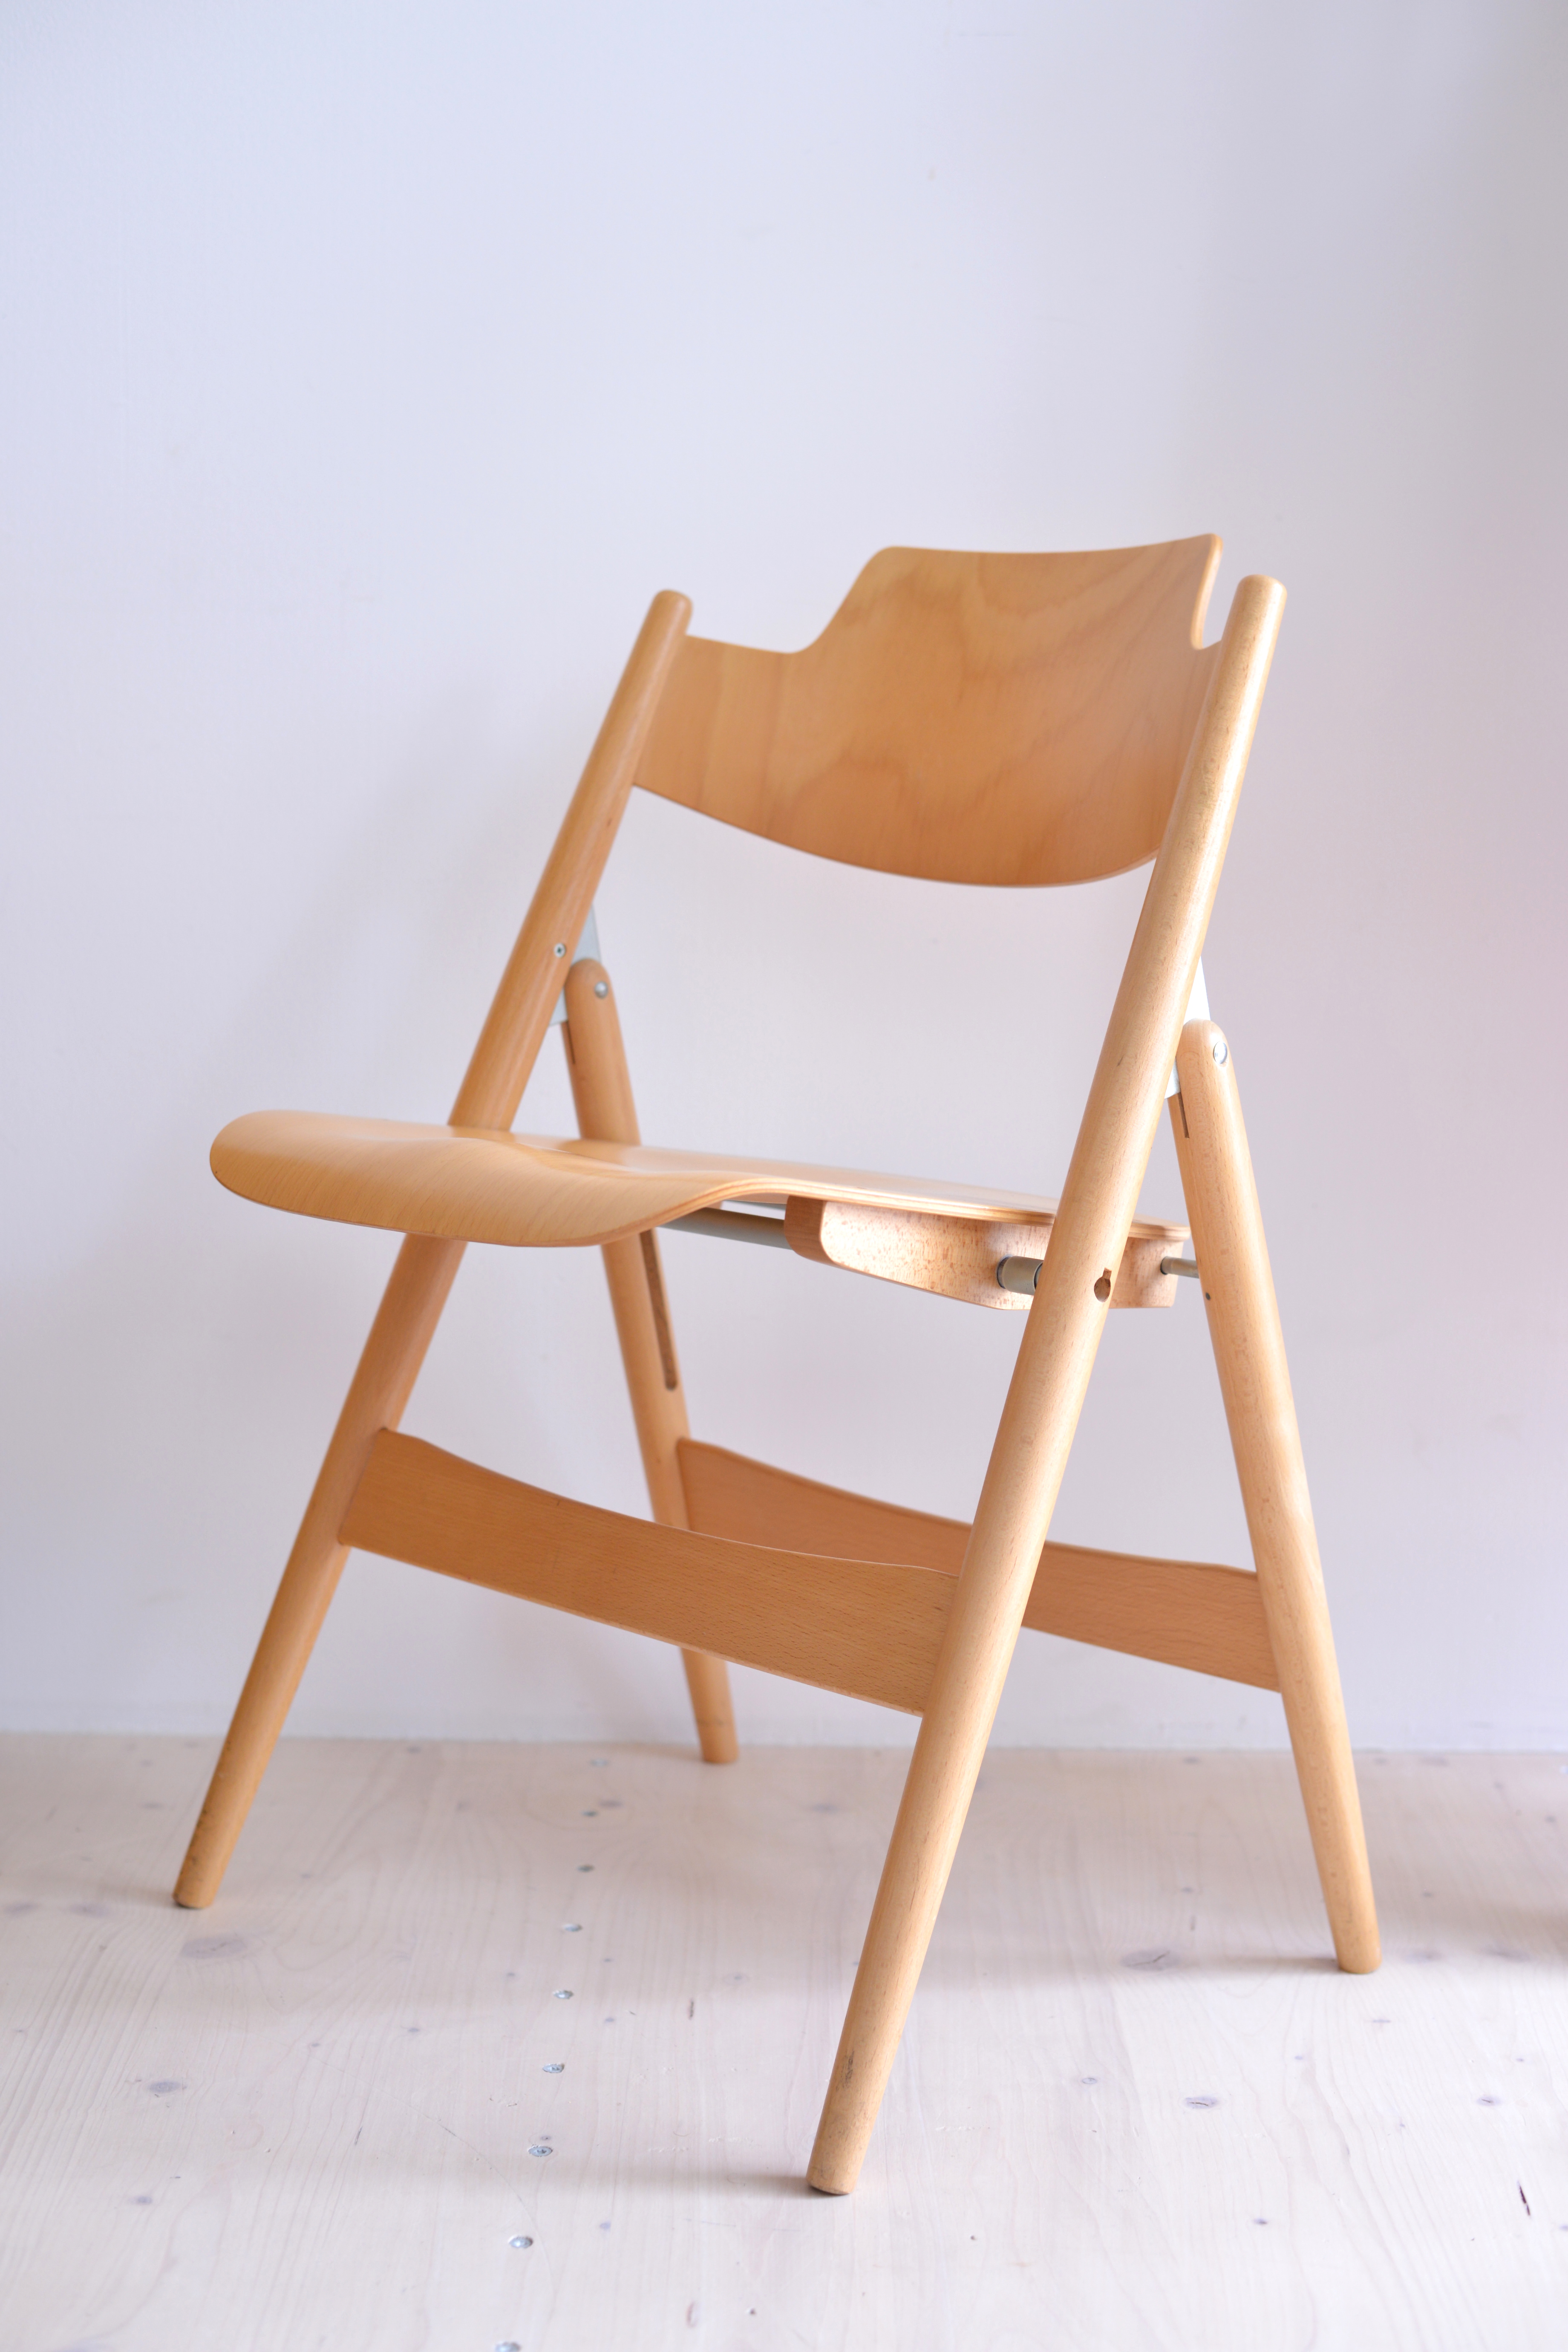 Egon-Eiermann-SE18-foldable-chair-heyday-möbel-02